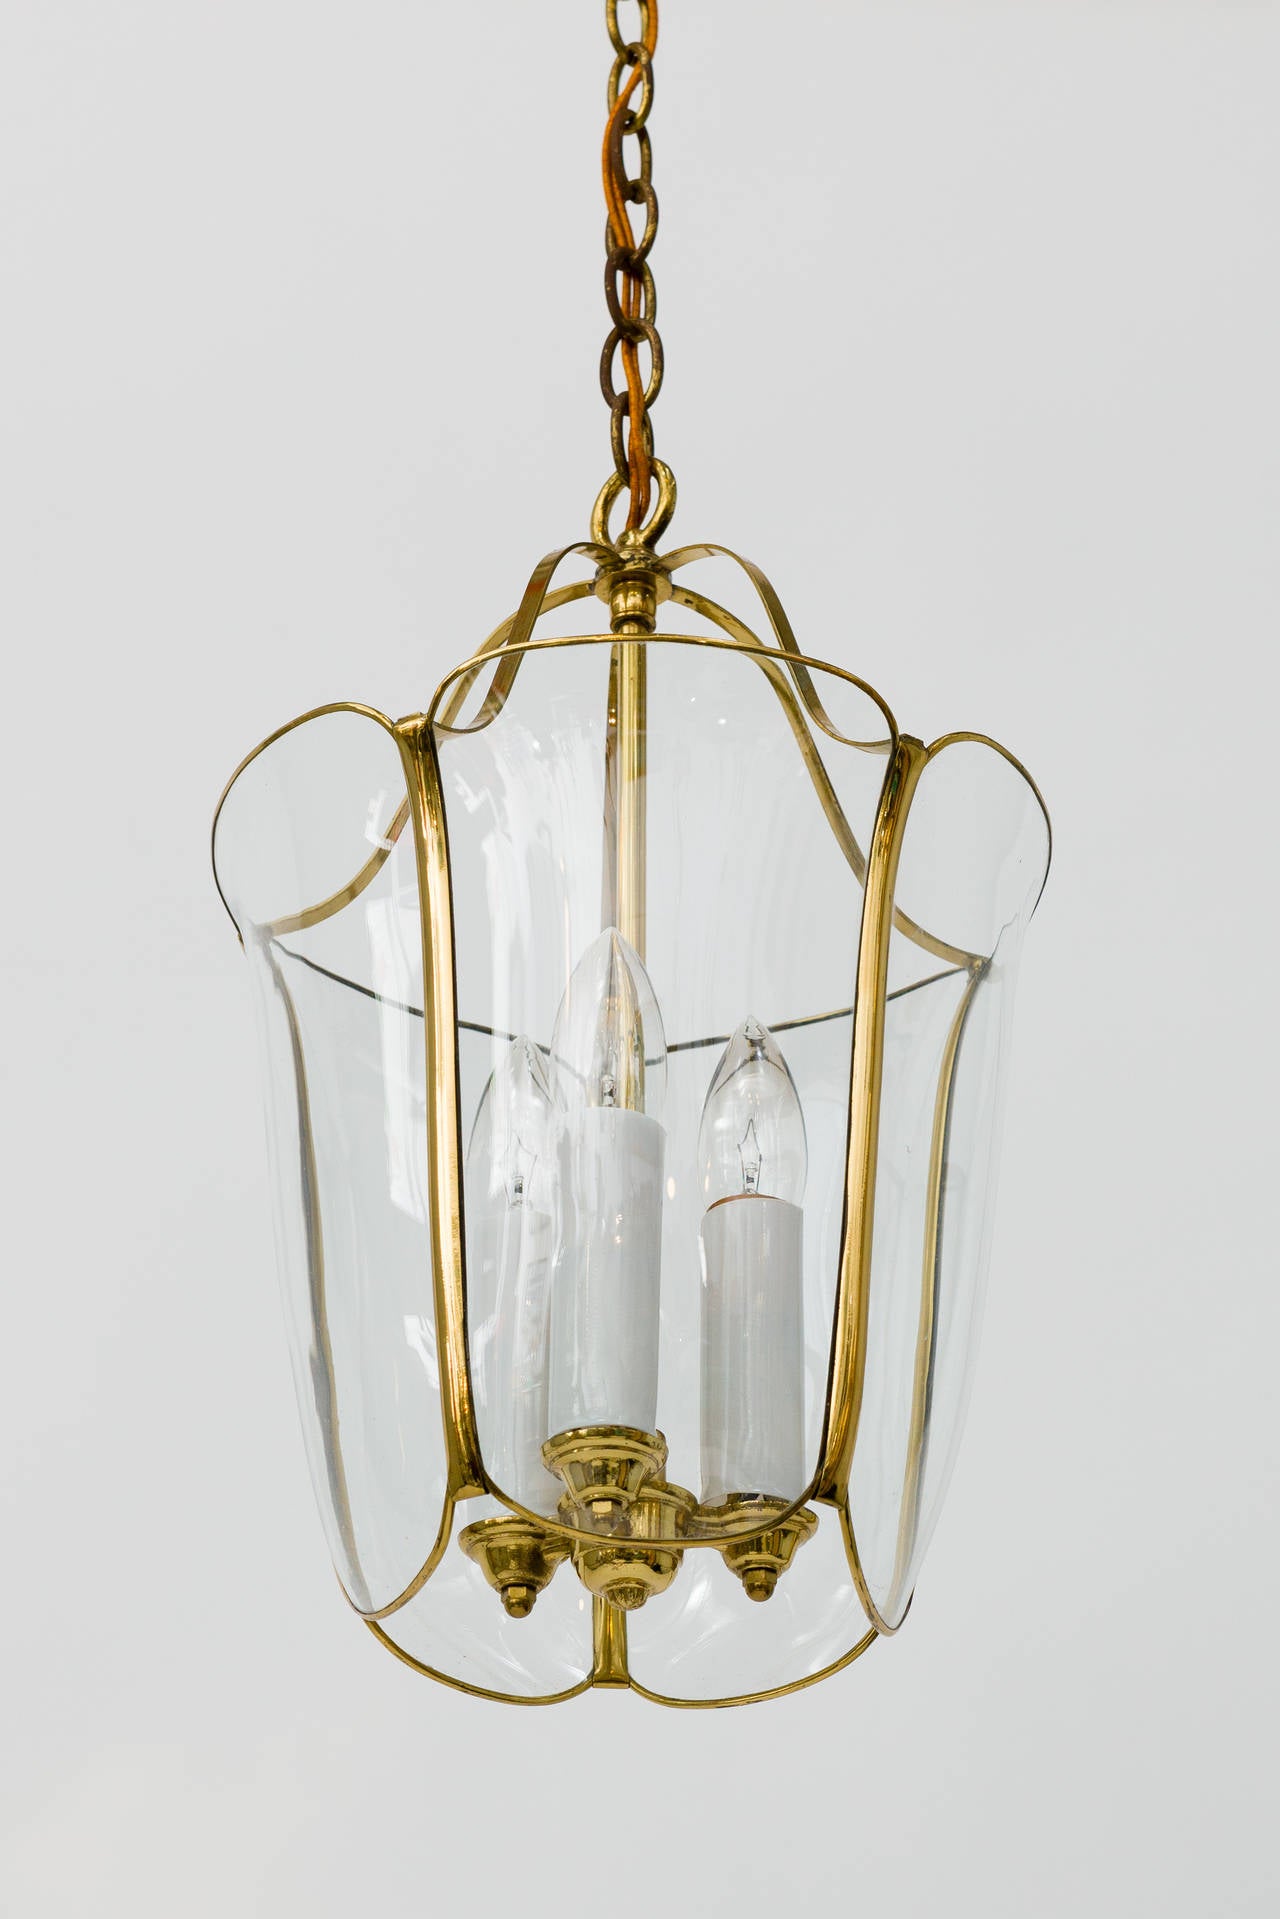 Brass and glass tulip pendant light fixture.